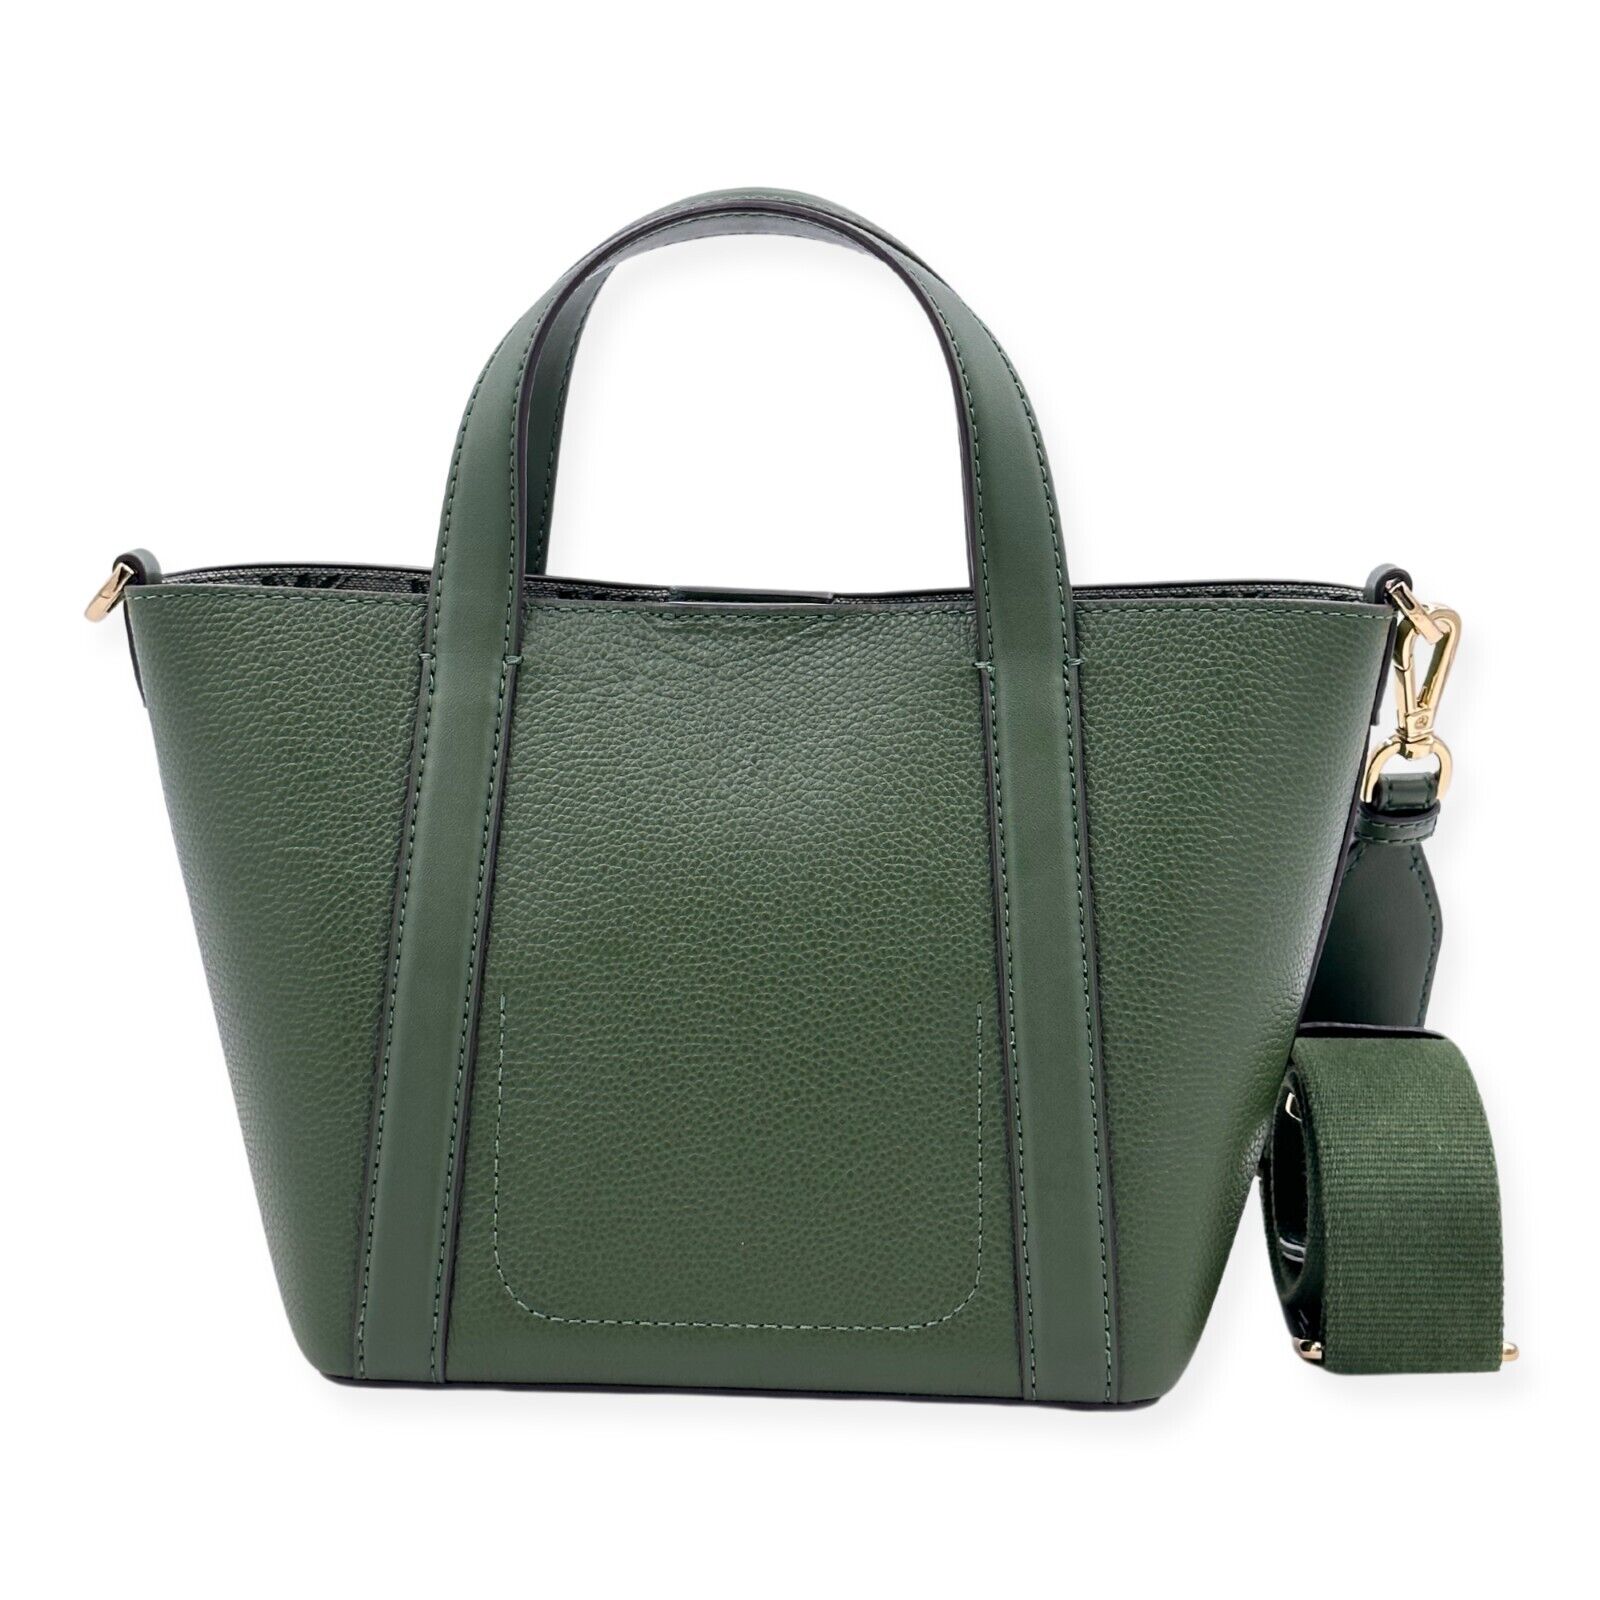 Michael Kors Hadleigh Small Double Handle Tote Bag - Amazon Green - 196237212887